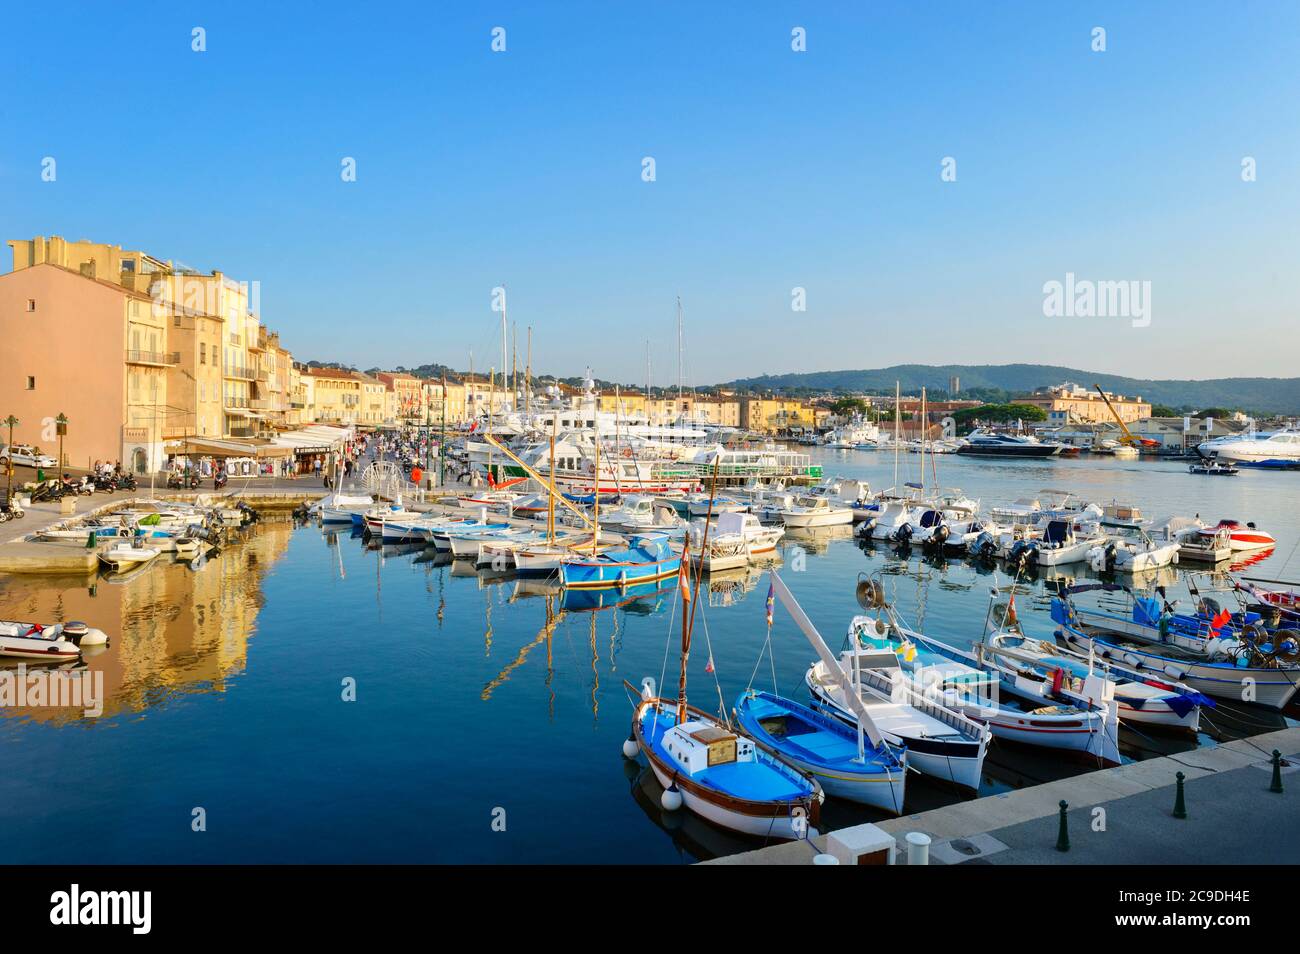 Saint Tropez - France - Europe, 25. Mai 2015: View of Saint-Tropez's small harbor in the Provence-Alpes-Côte d’Azur region. Stock Photo